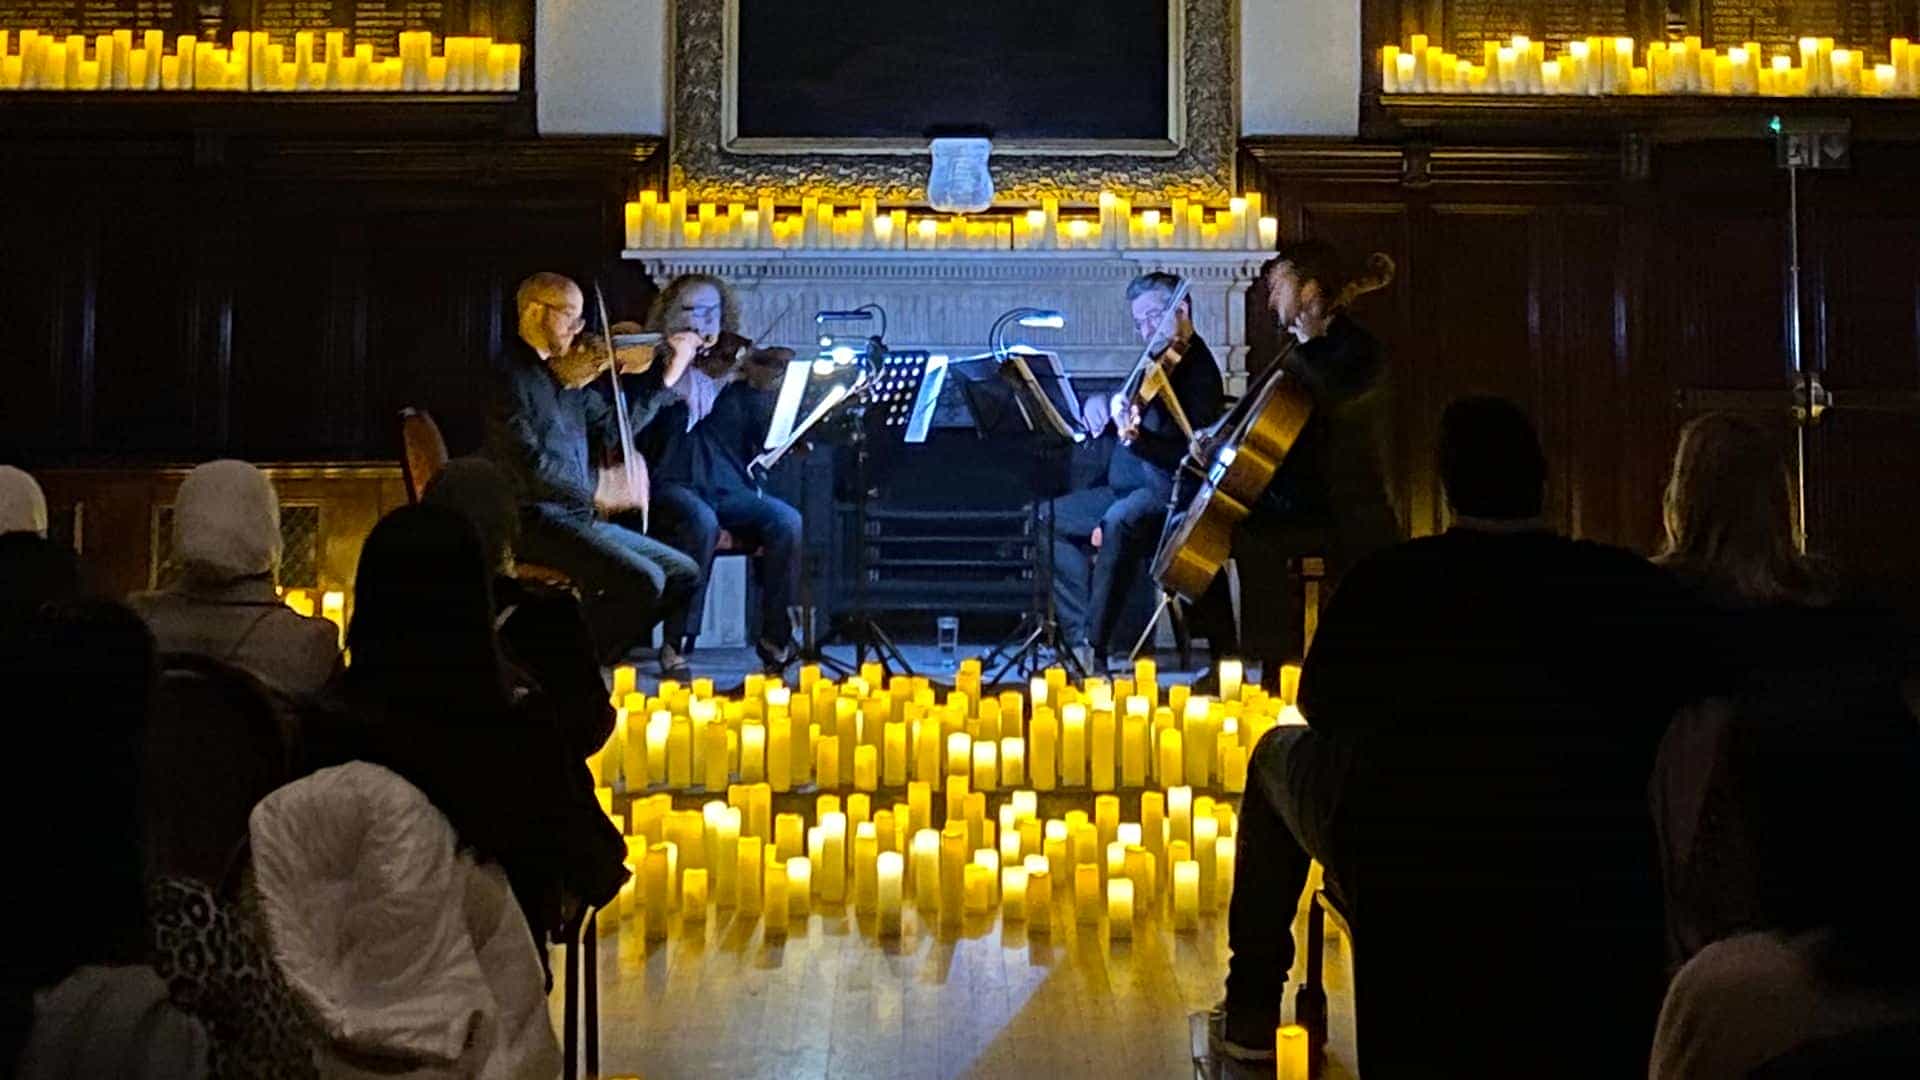 Candlelight - Vivaldi's Four Seasons